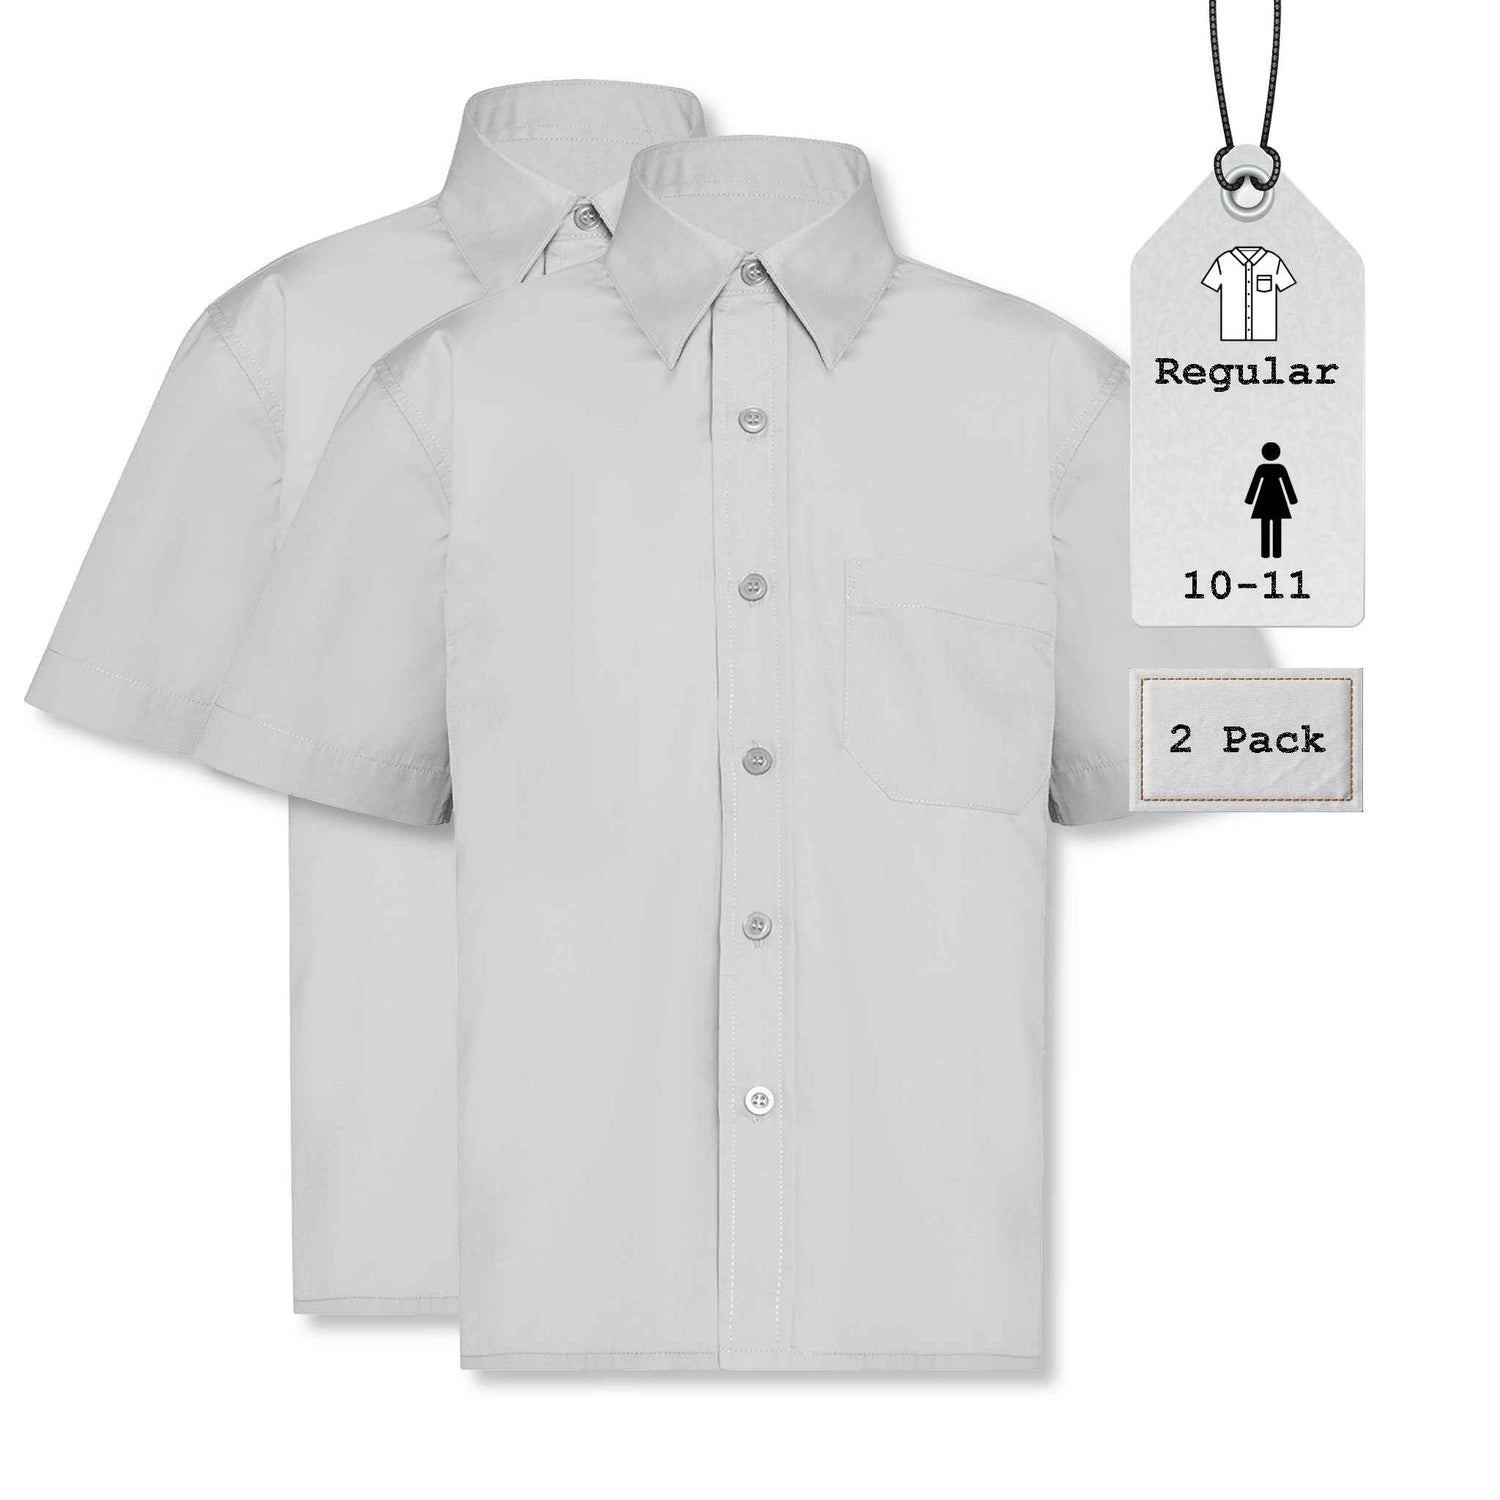 Girls Short Sleeve School Shirts | Regular Fit | White | 10-11 Years | 2 Pack